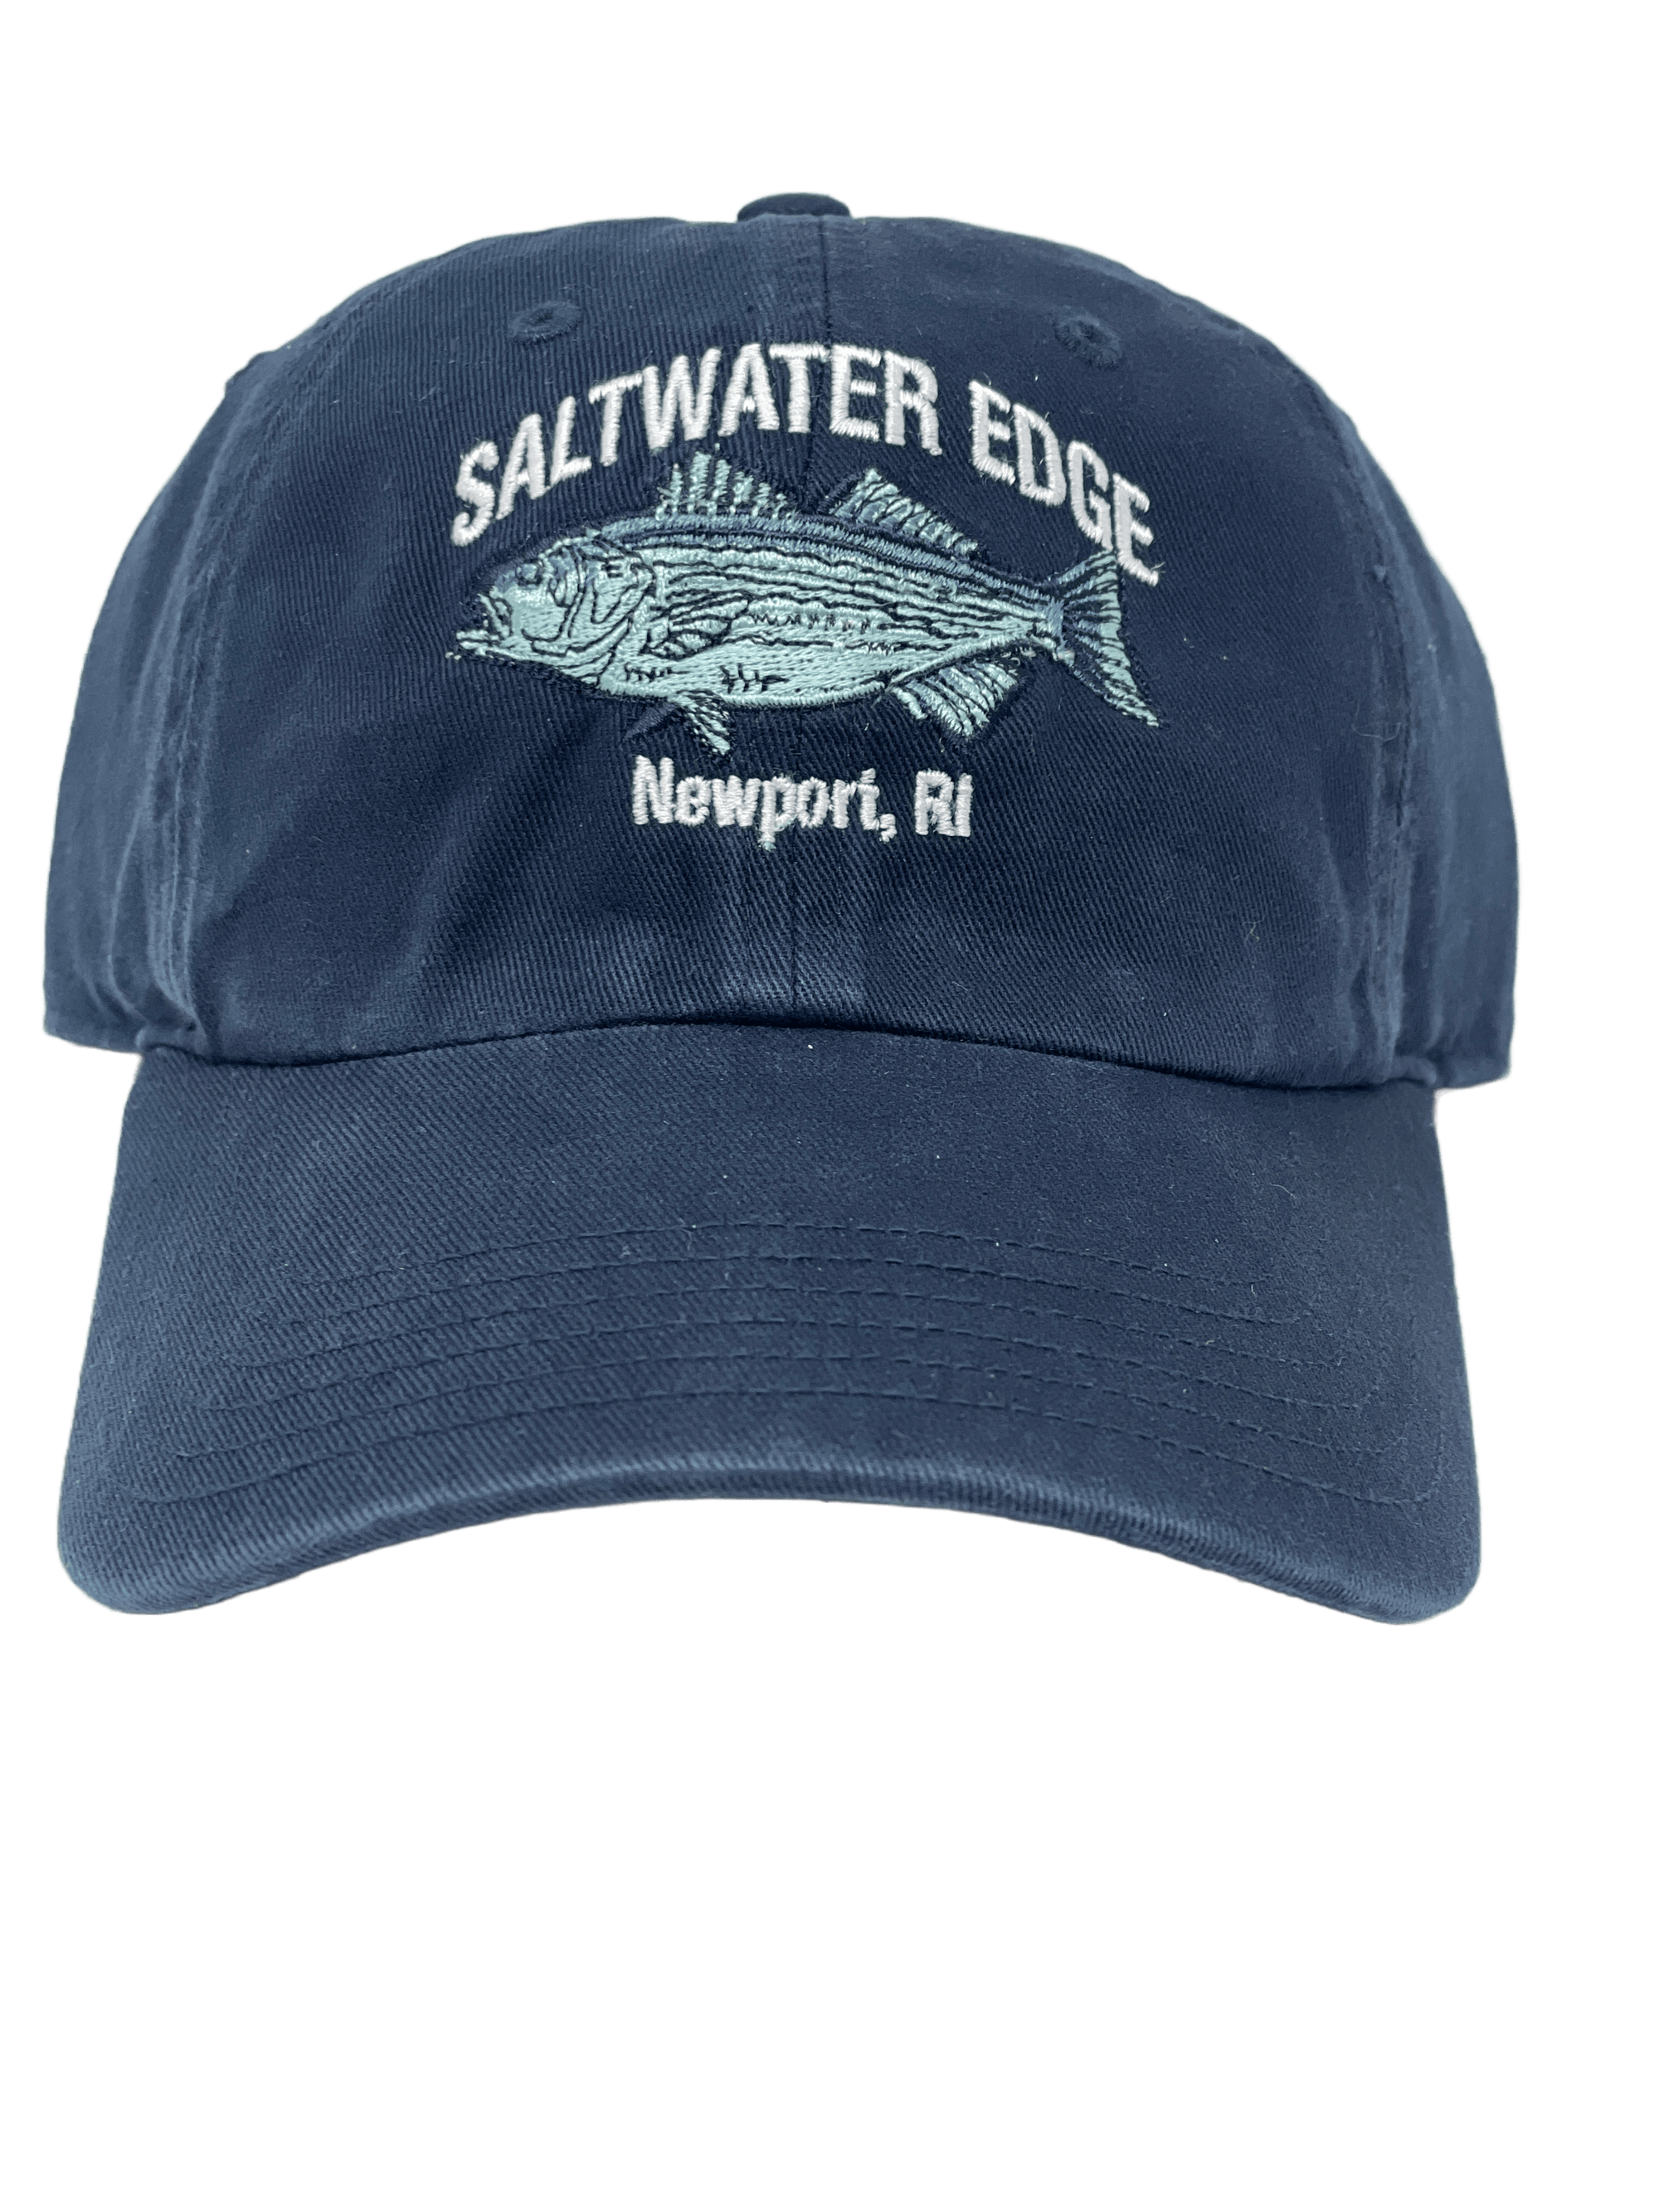 Saltwater Edge Classic Striper Cap Navy